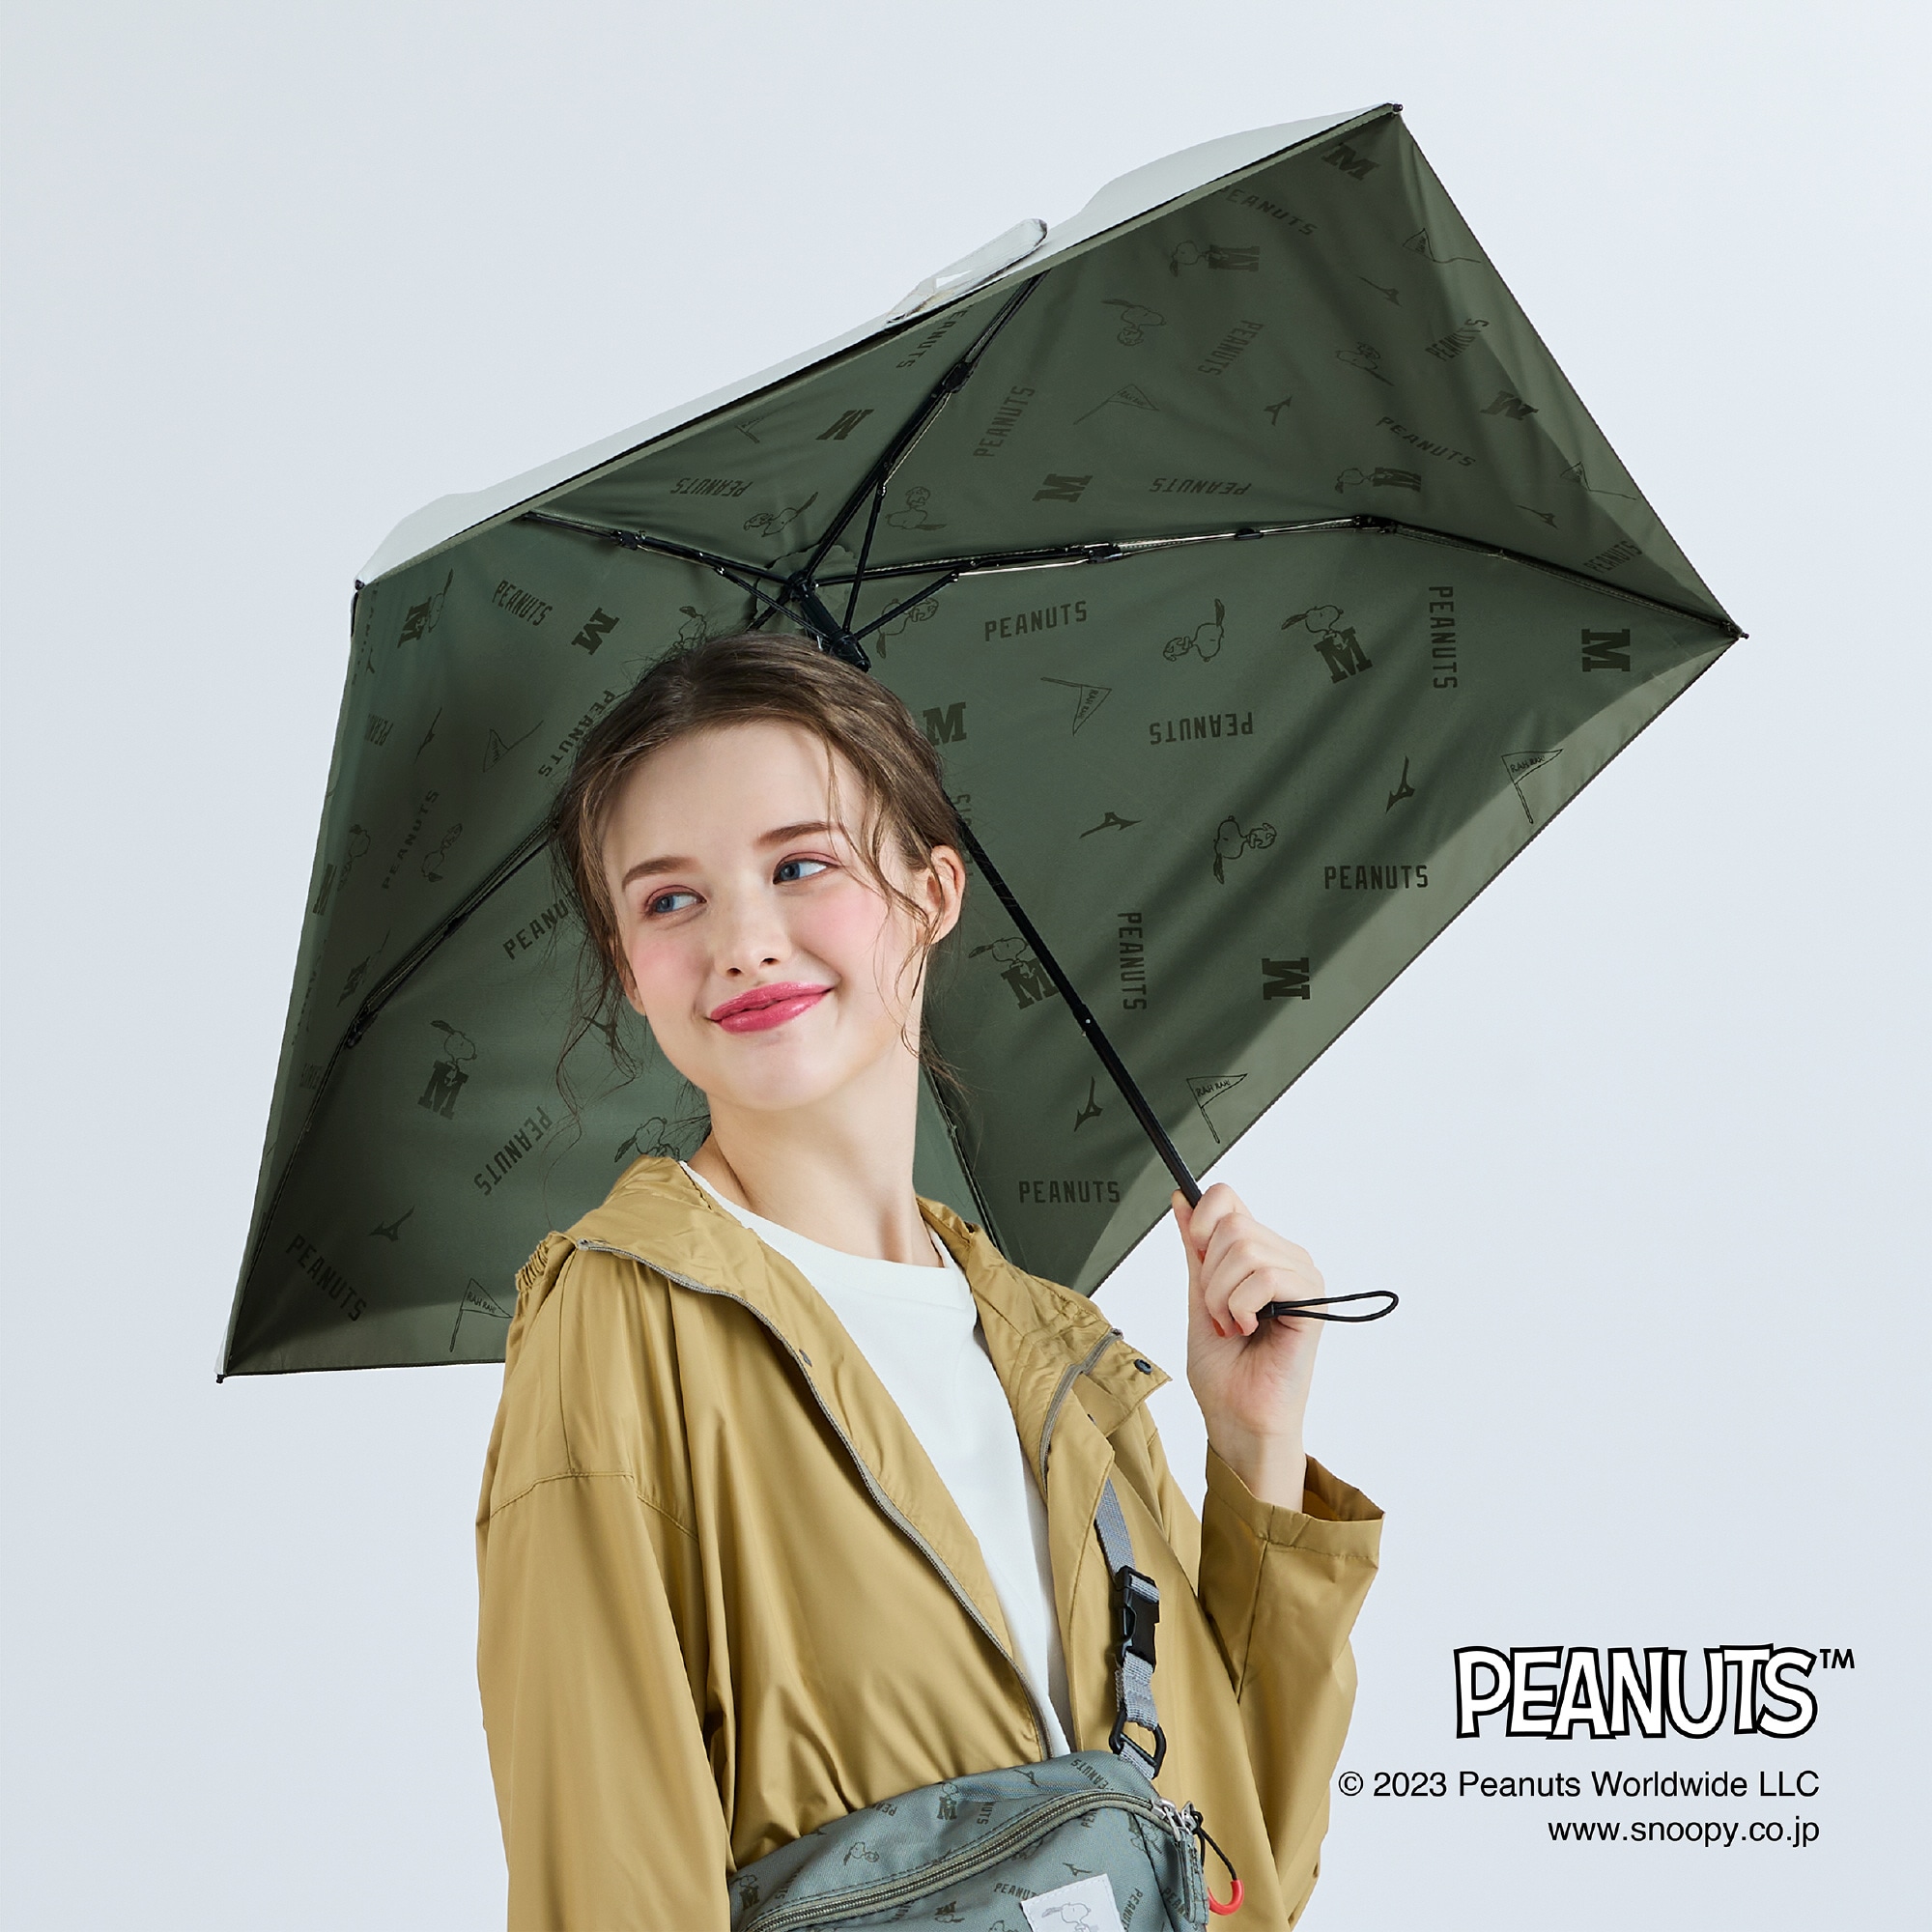 PEANUTS】-20 UMBRELLA PEANUTS【晴雨兼用傘】|C3JCL302|その他|健康・日常生活品|ミズノ公式オンライン